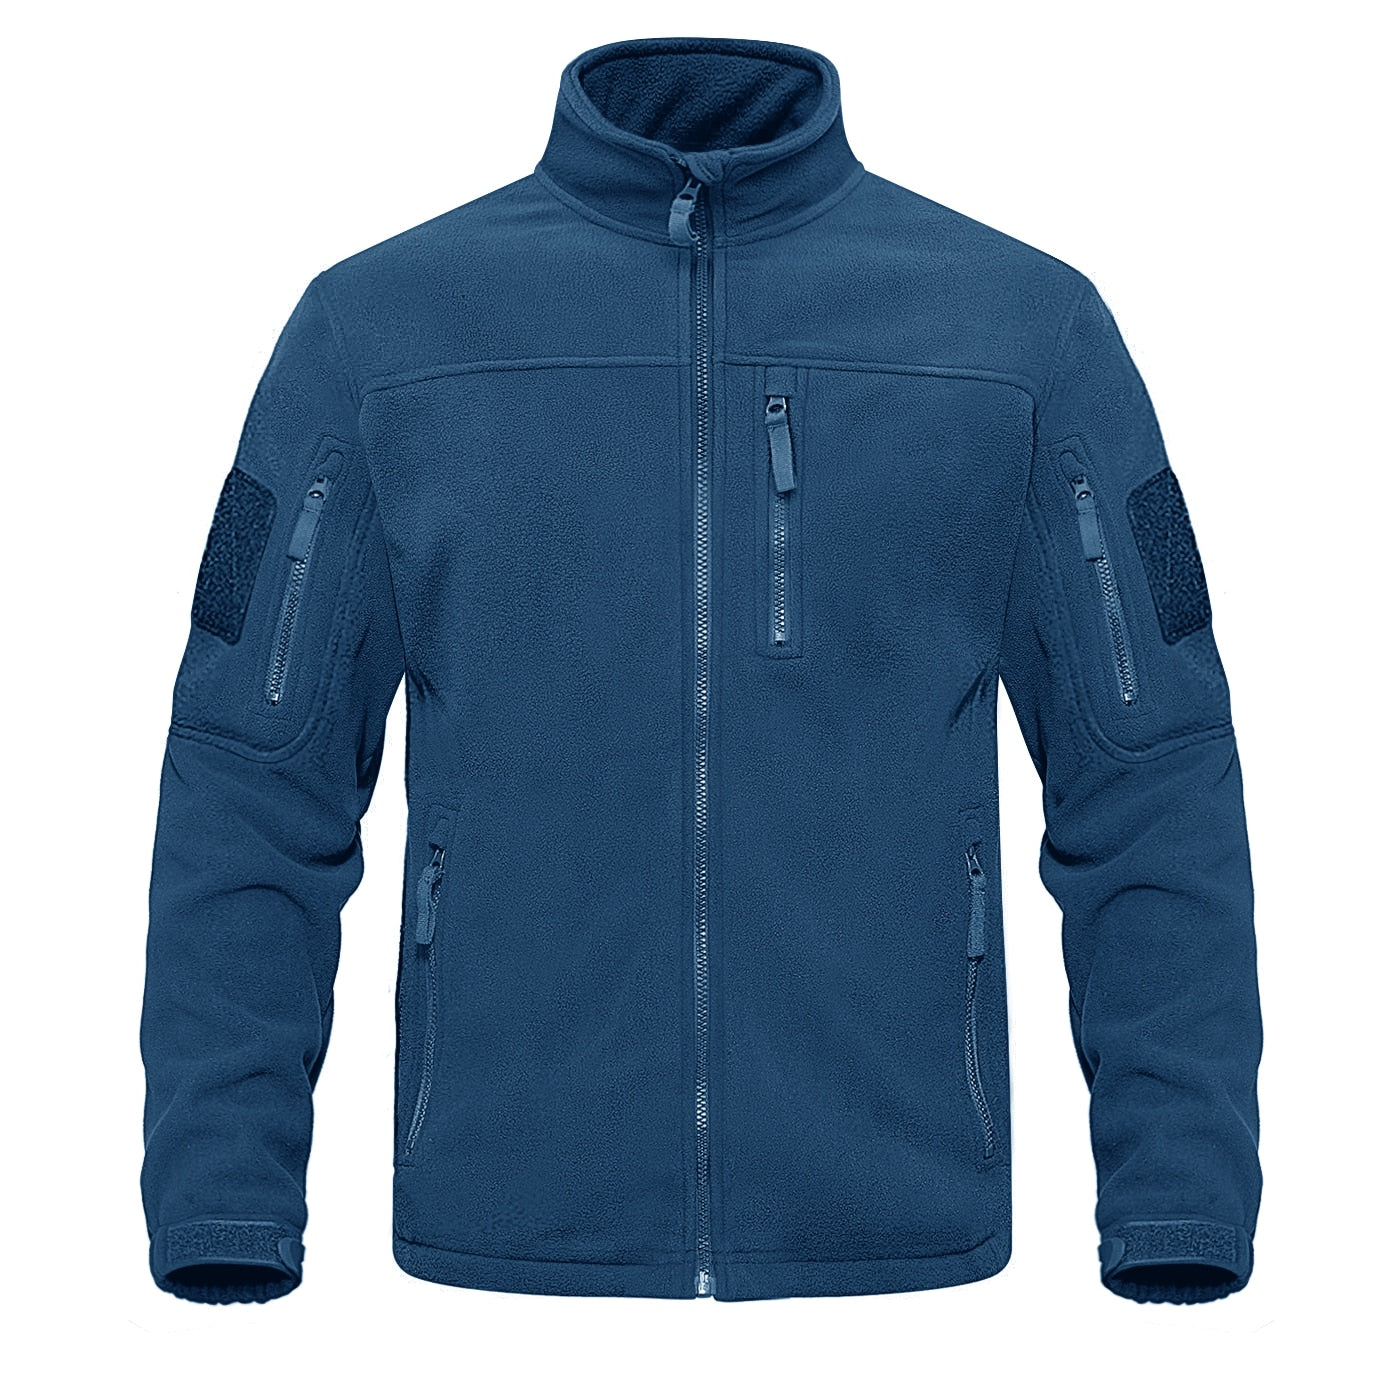 Men's Tactical Army Fleece Military Jacket dark blue